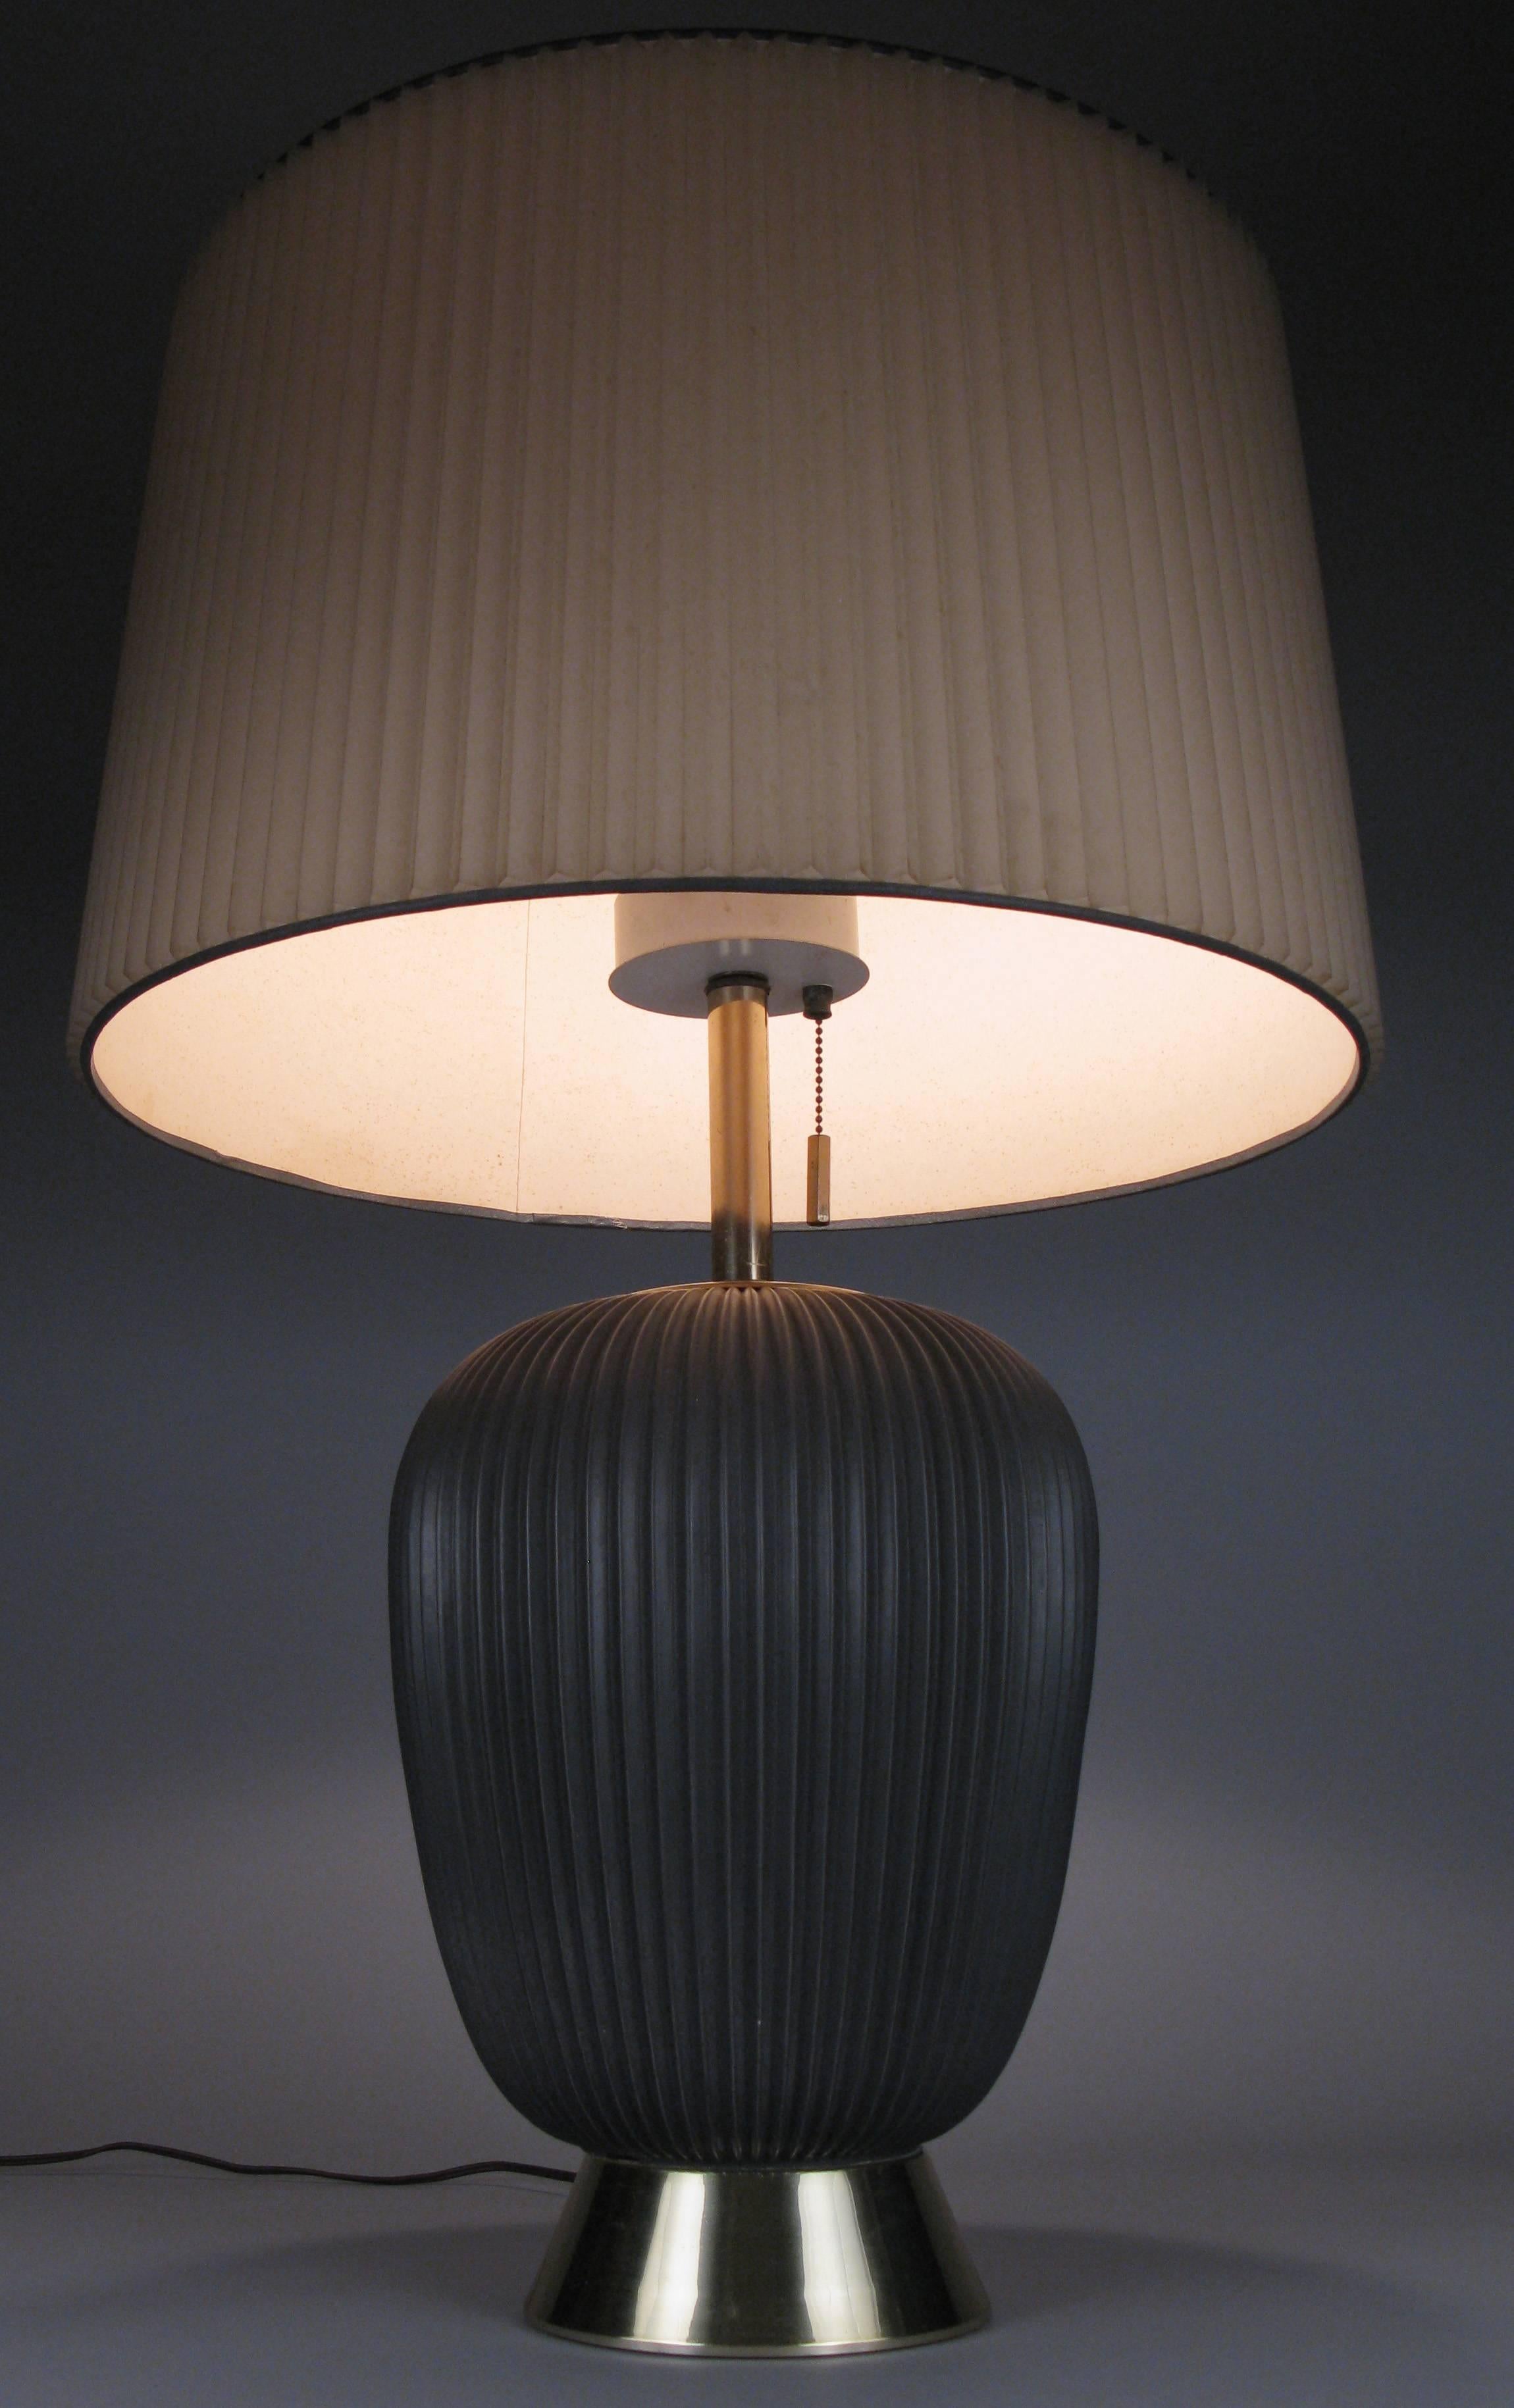 American Mid-Century Modern 1950s Gray Ceramic Lamp by Gerald Thurston for Lightolier For Sale